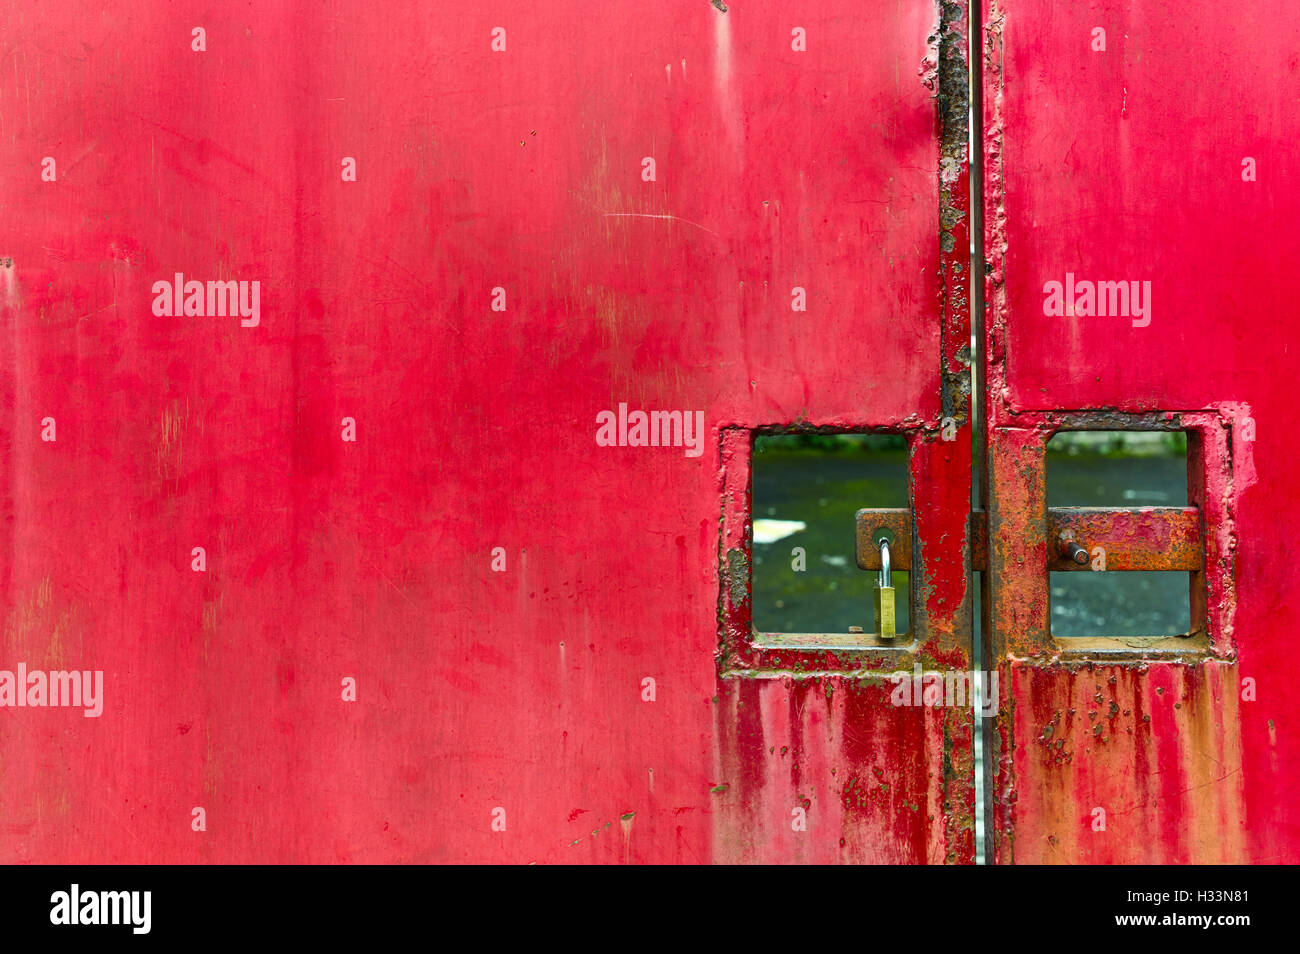 Red metal doors with padlock Stock Photo